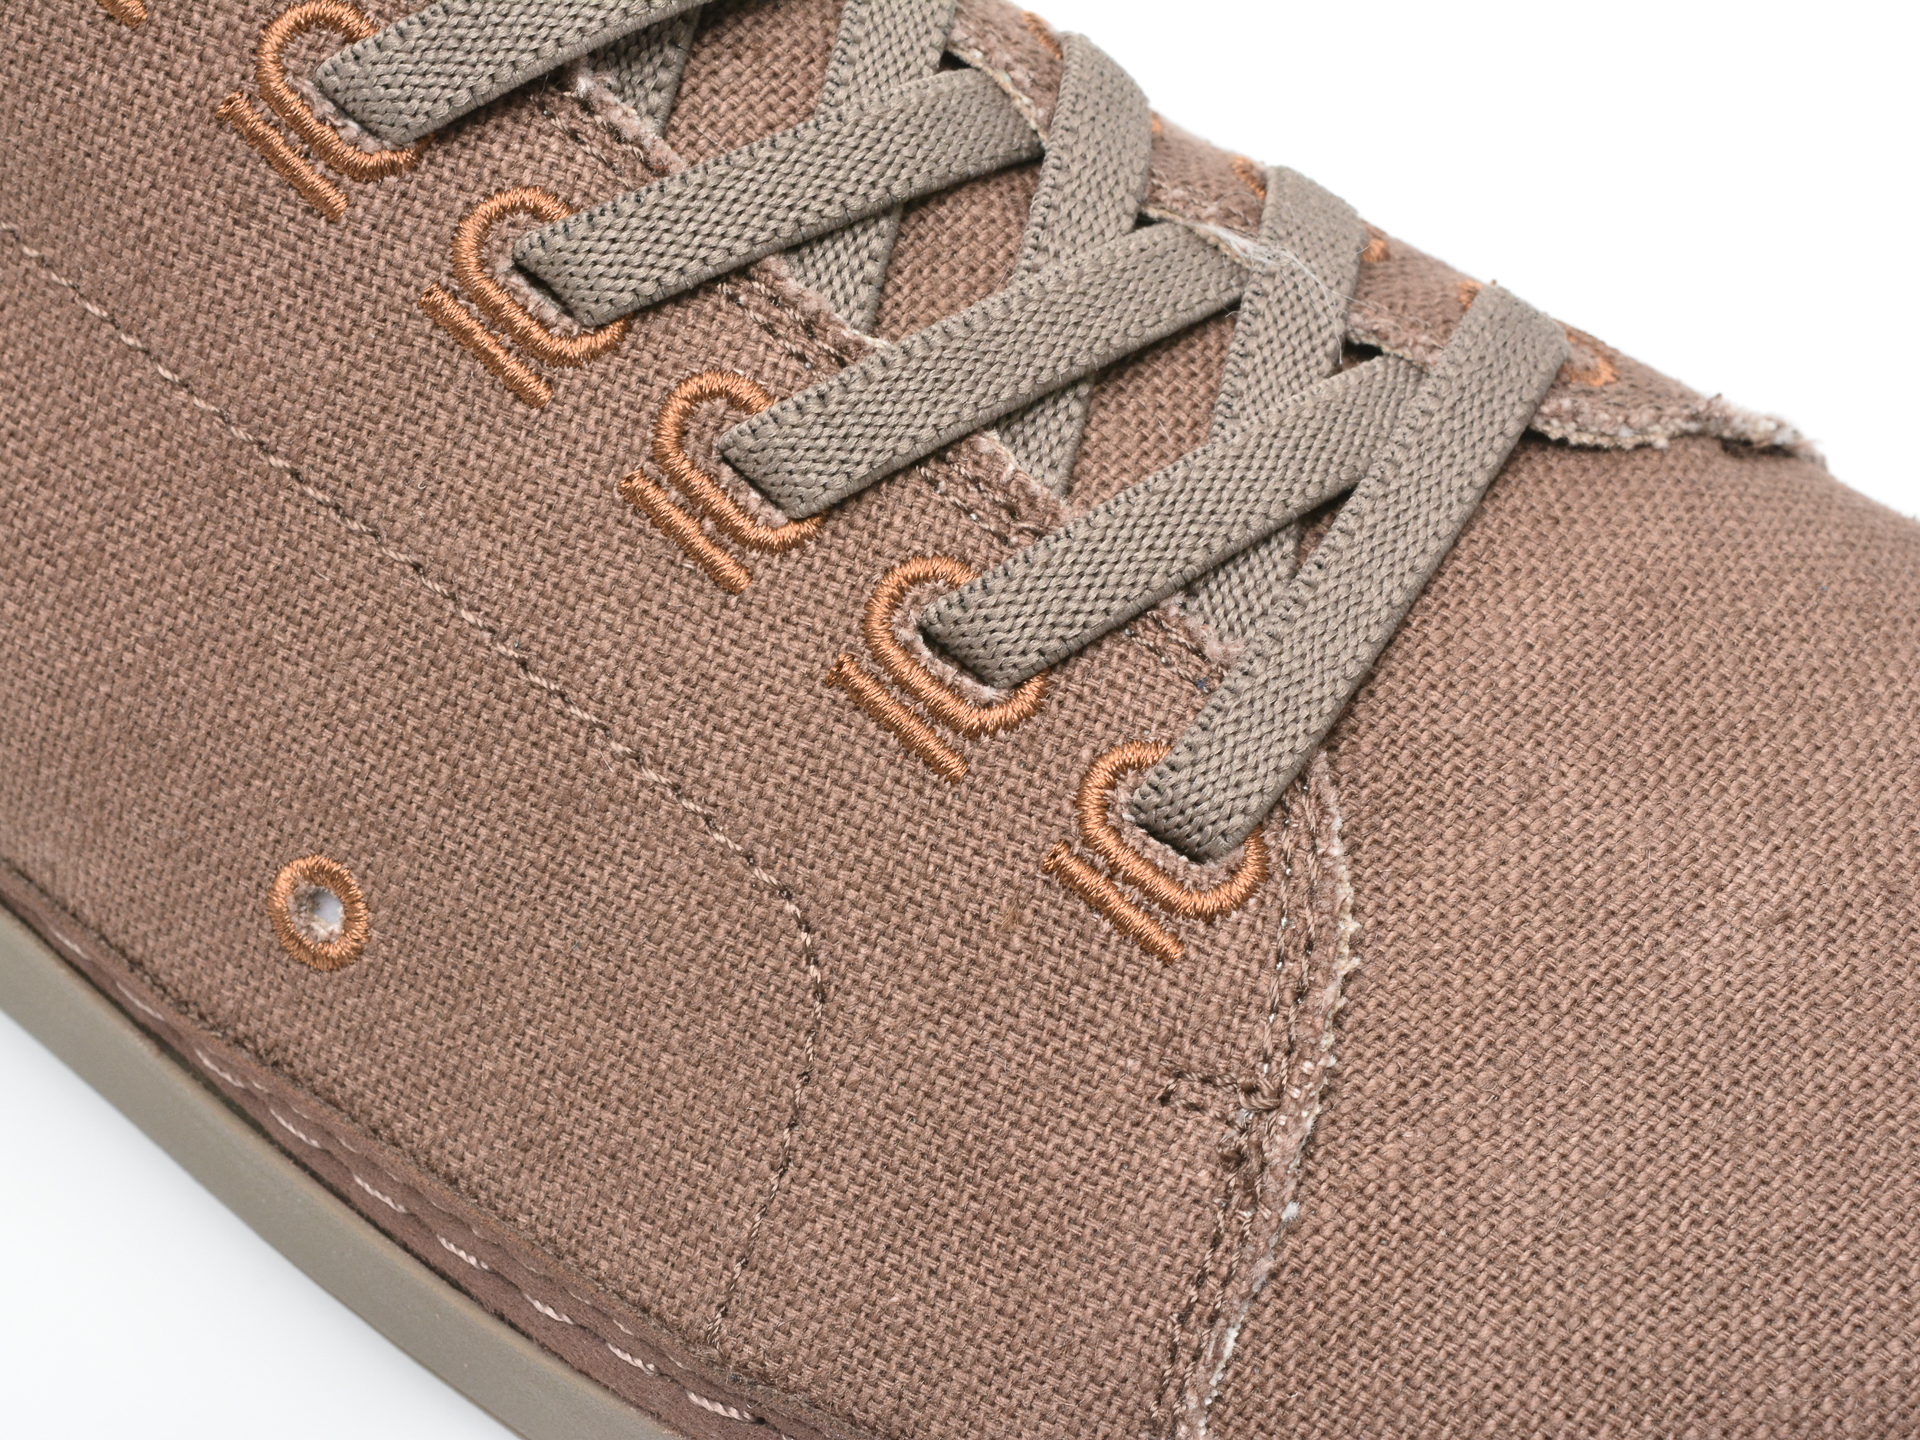 Poze Pantofi CLARKS maro, HIGLEY LACE 0912, din material textil